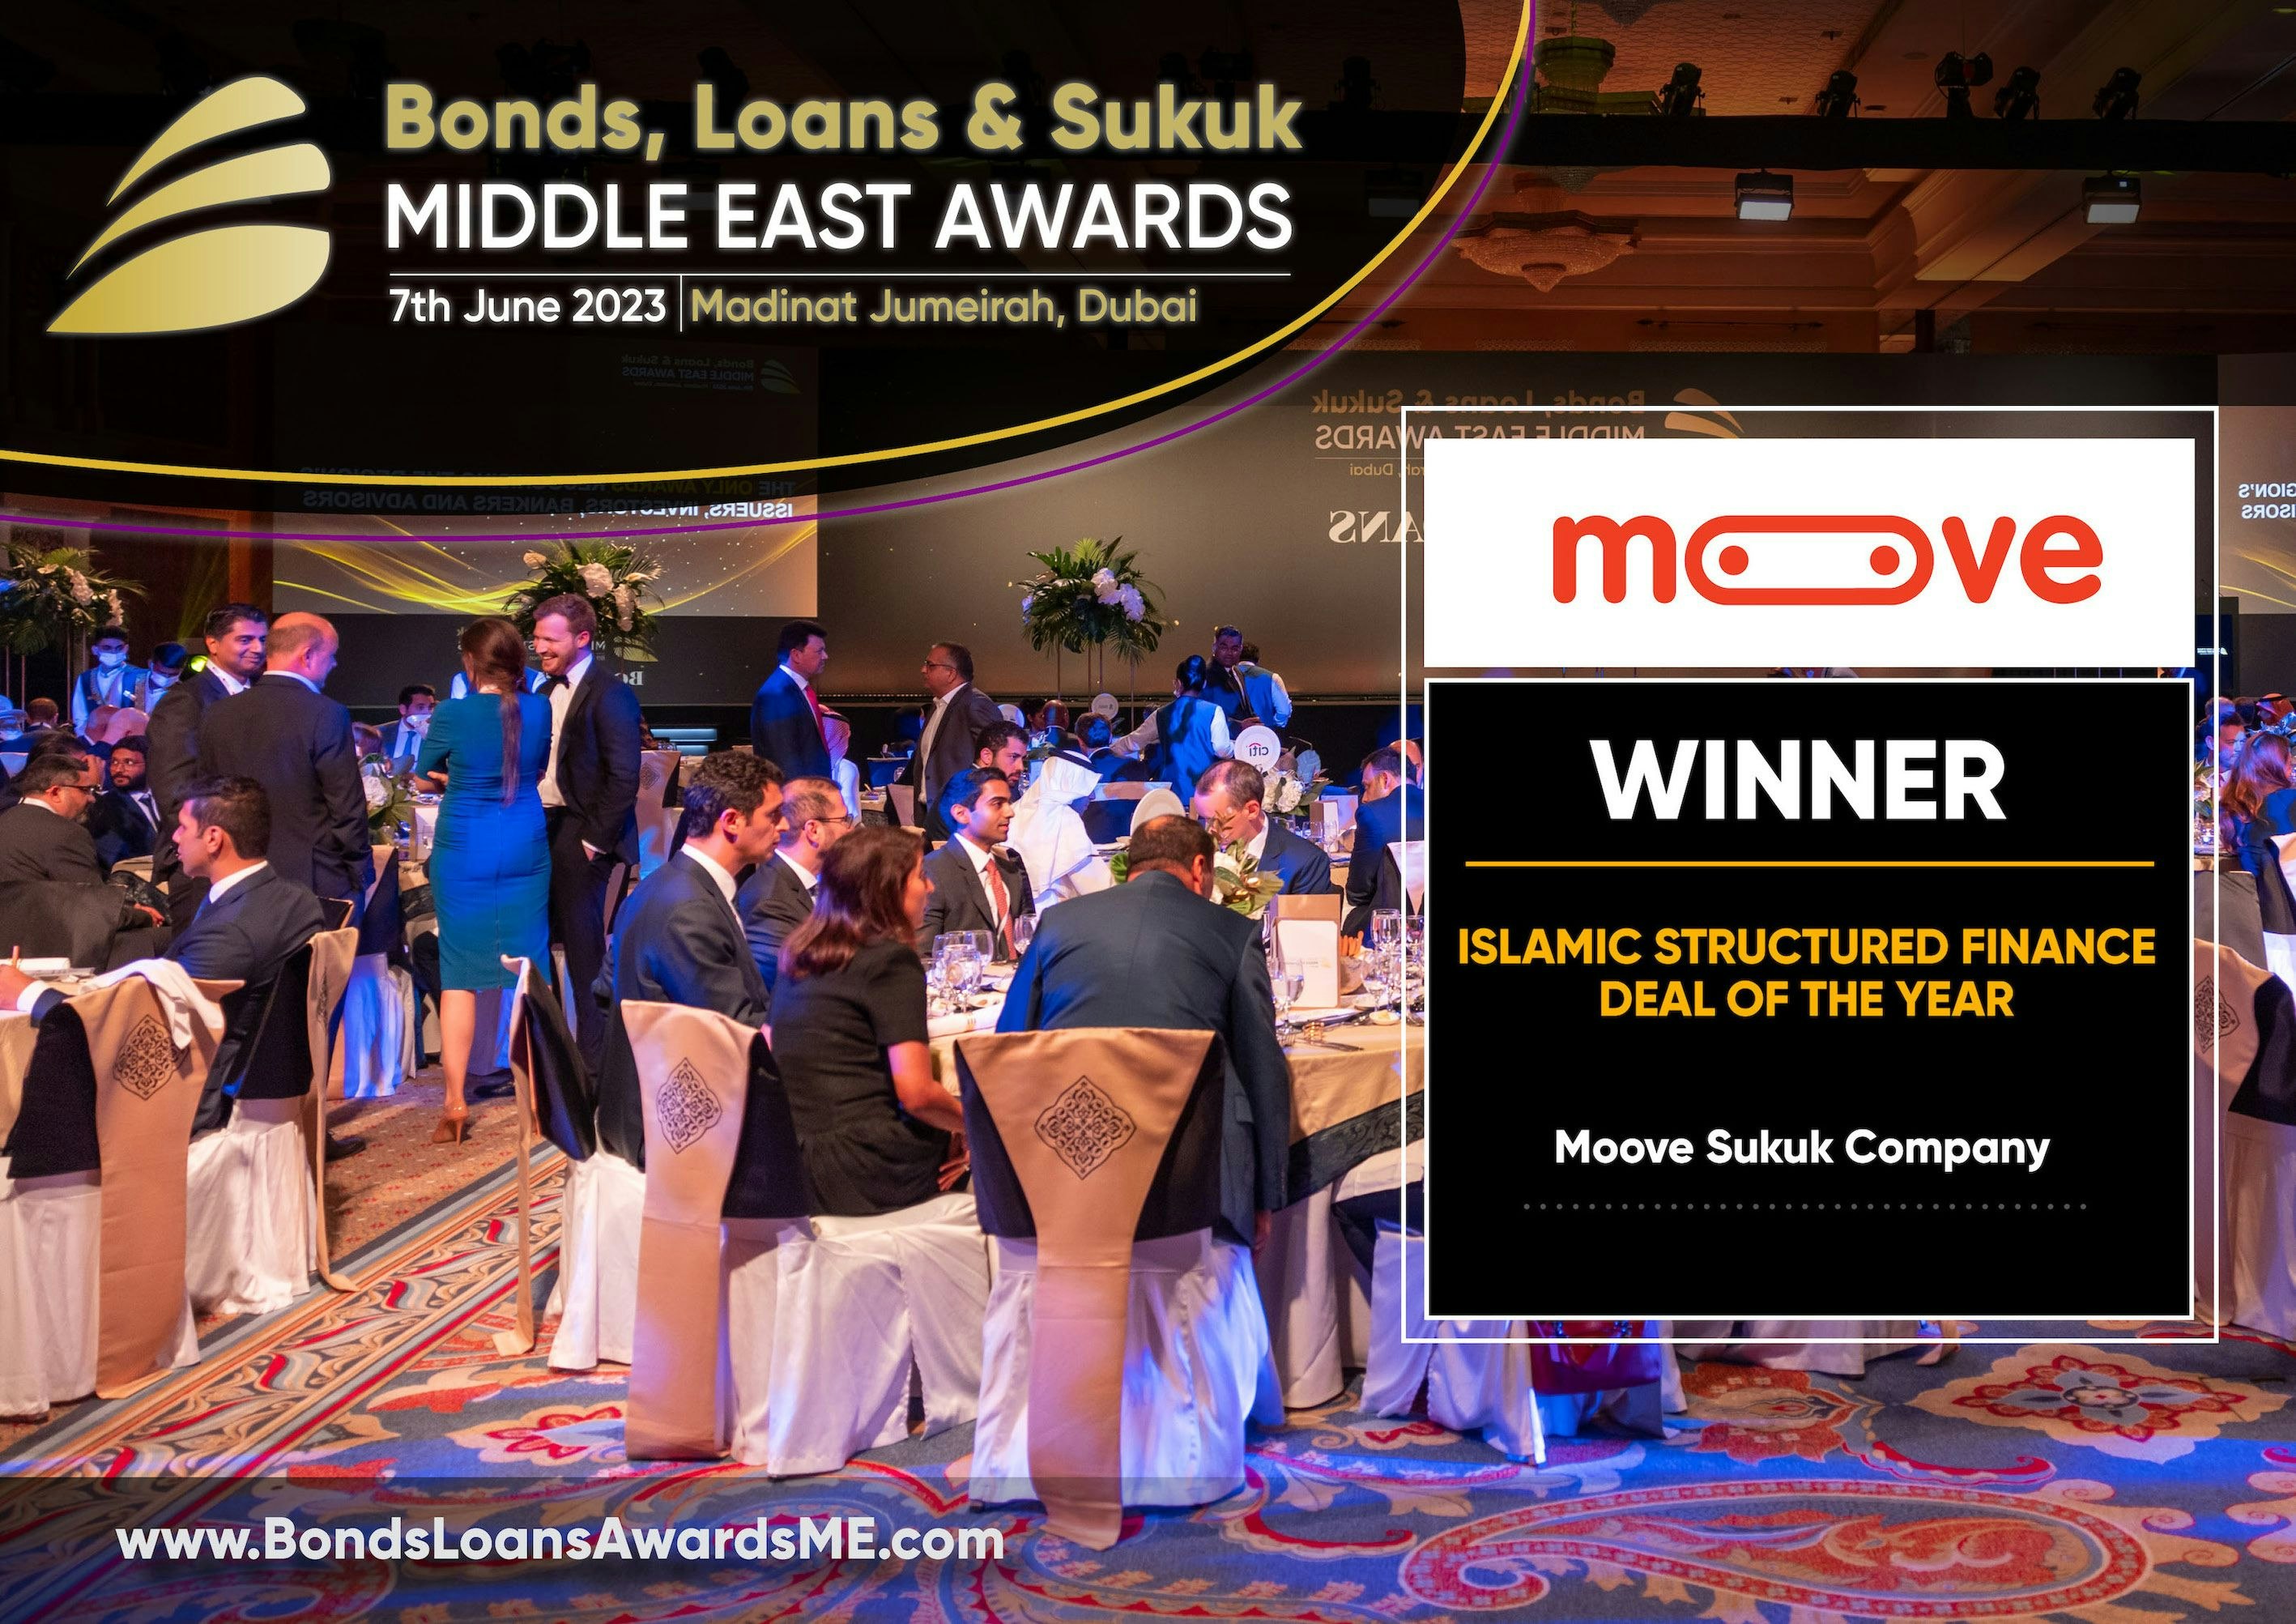 Winner of the Bonds, Loans & Sukuk Middle East Awards 2023